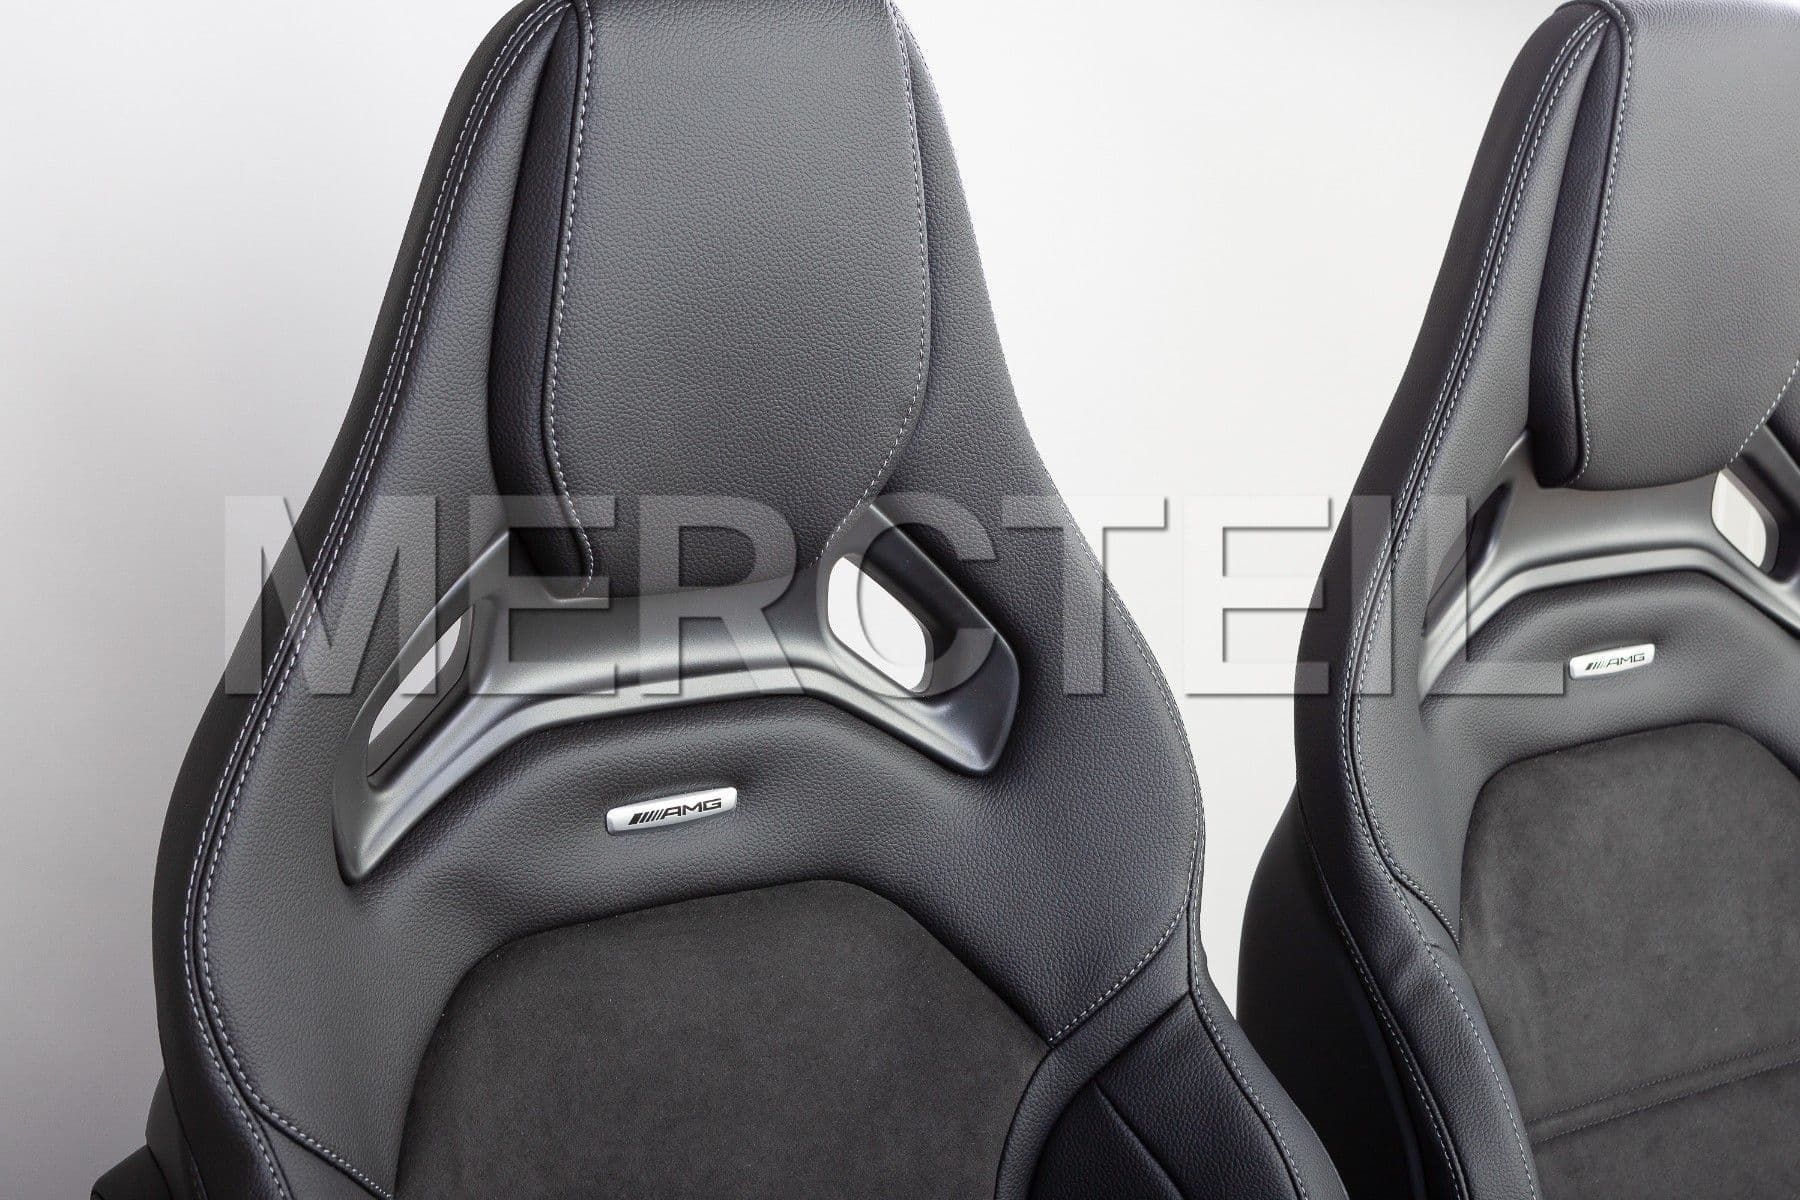 https://mercteil.com/s3/c-class-amg-sport-alcantara-and-leather-seats-lhd-genuine-mercedes-amg-1643113903393-x2.jpg